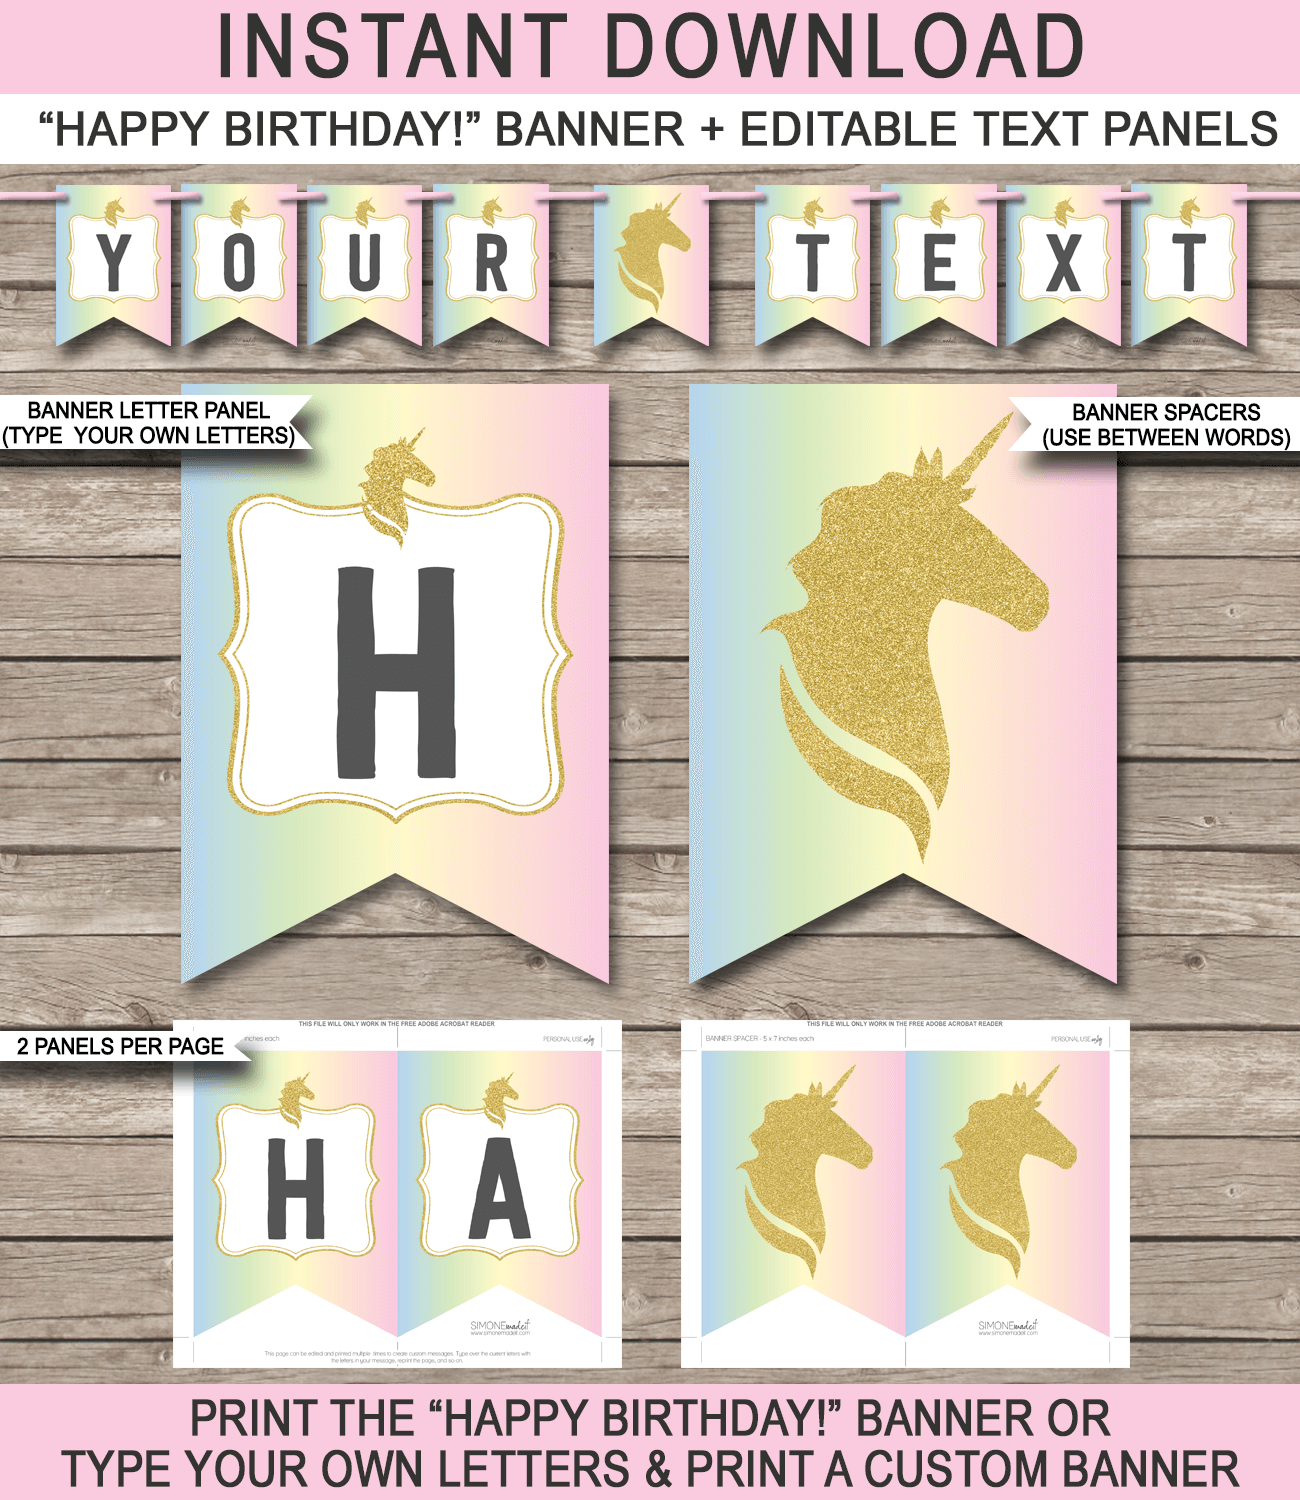 Unicorn Pennant Banner Template | Unicorn Theme Happy Birthday Banner | Custom Banner | DIY Editable & Printable Template | Instant Download via simonemadeit.com 